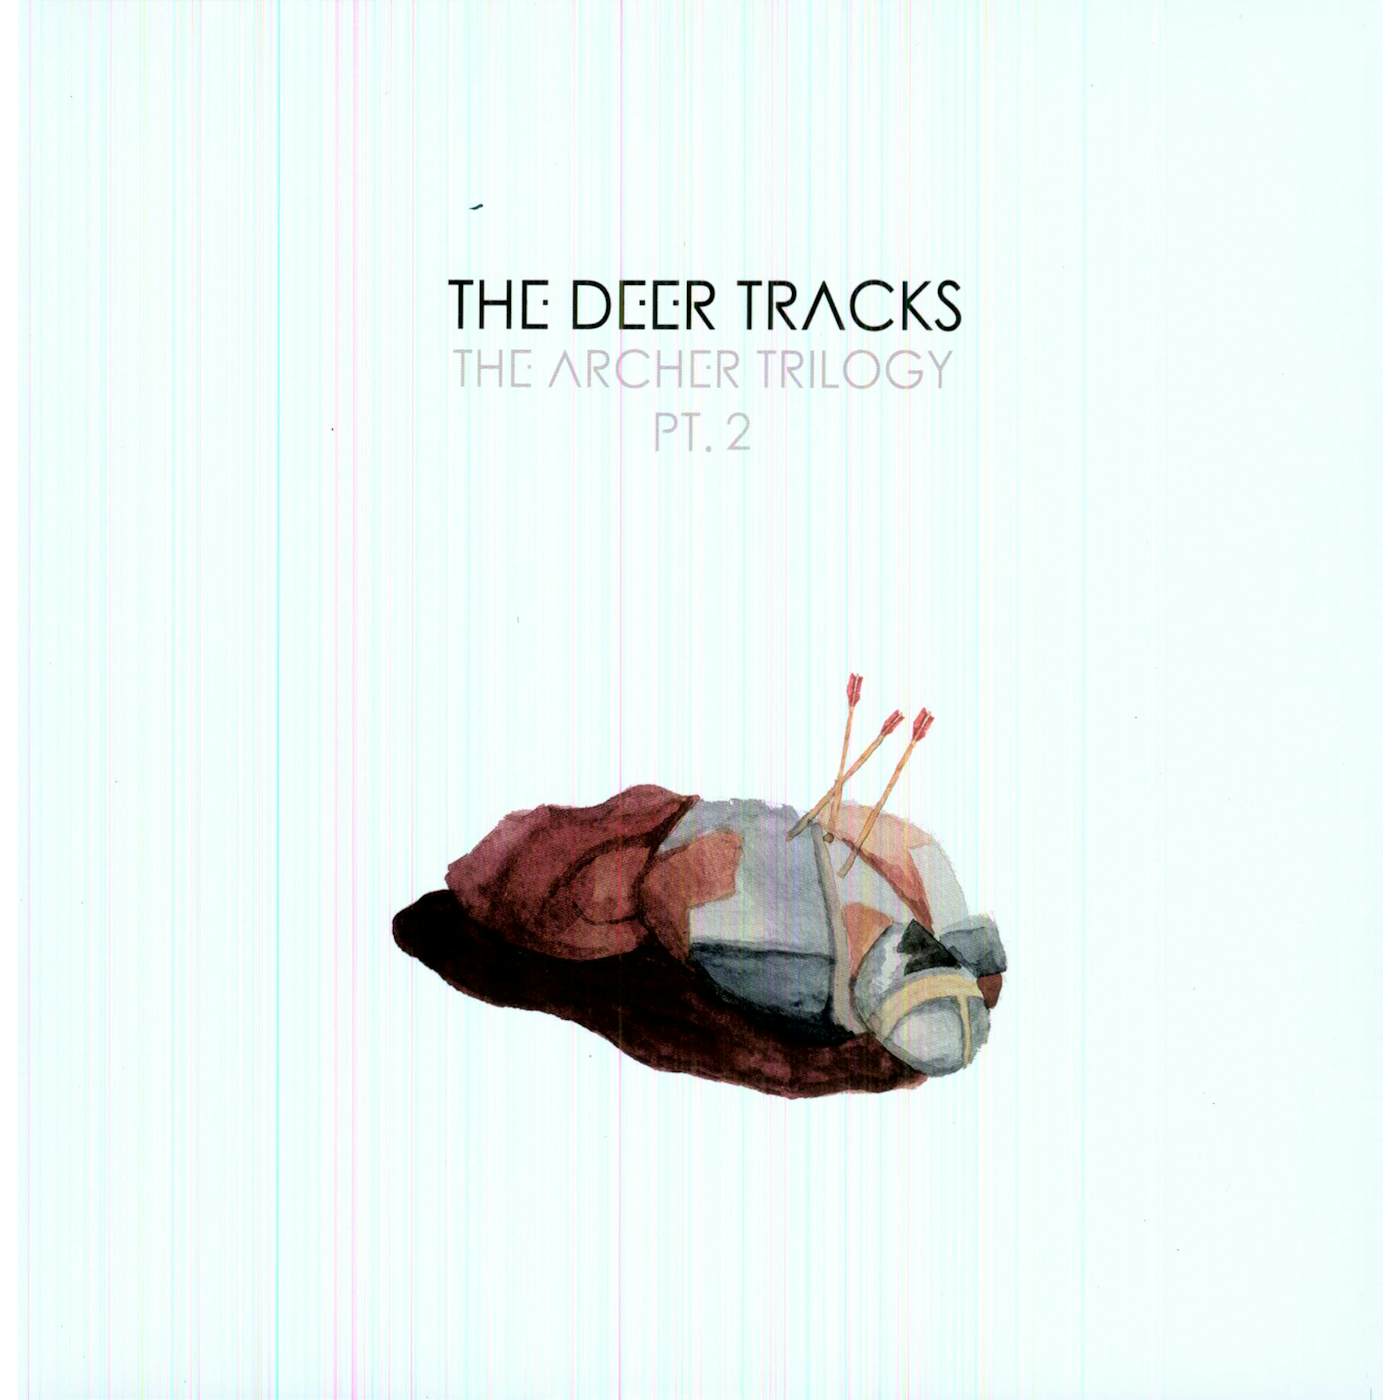 The Deer Tracks ARCHER TRILOGY 2 Vinyl Record